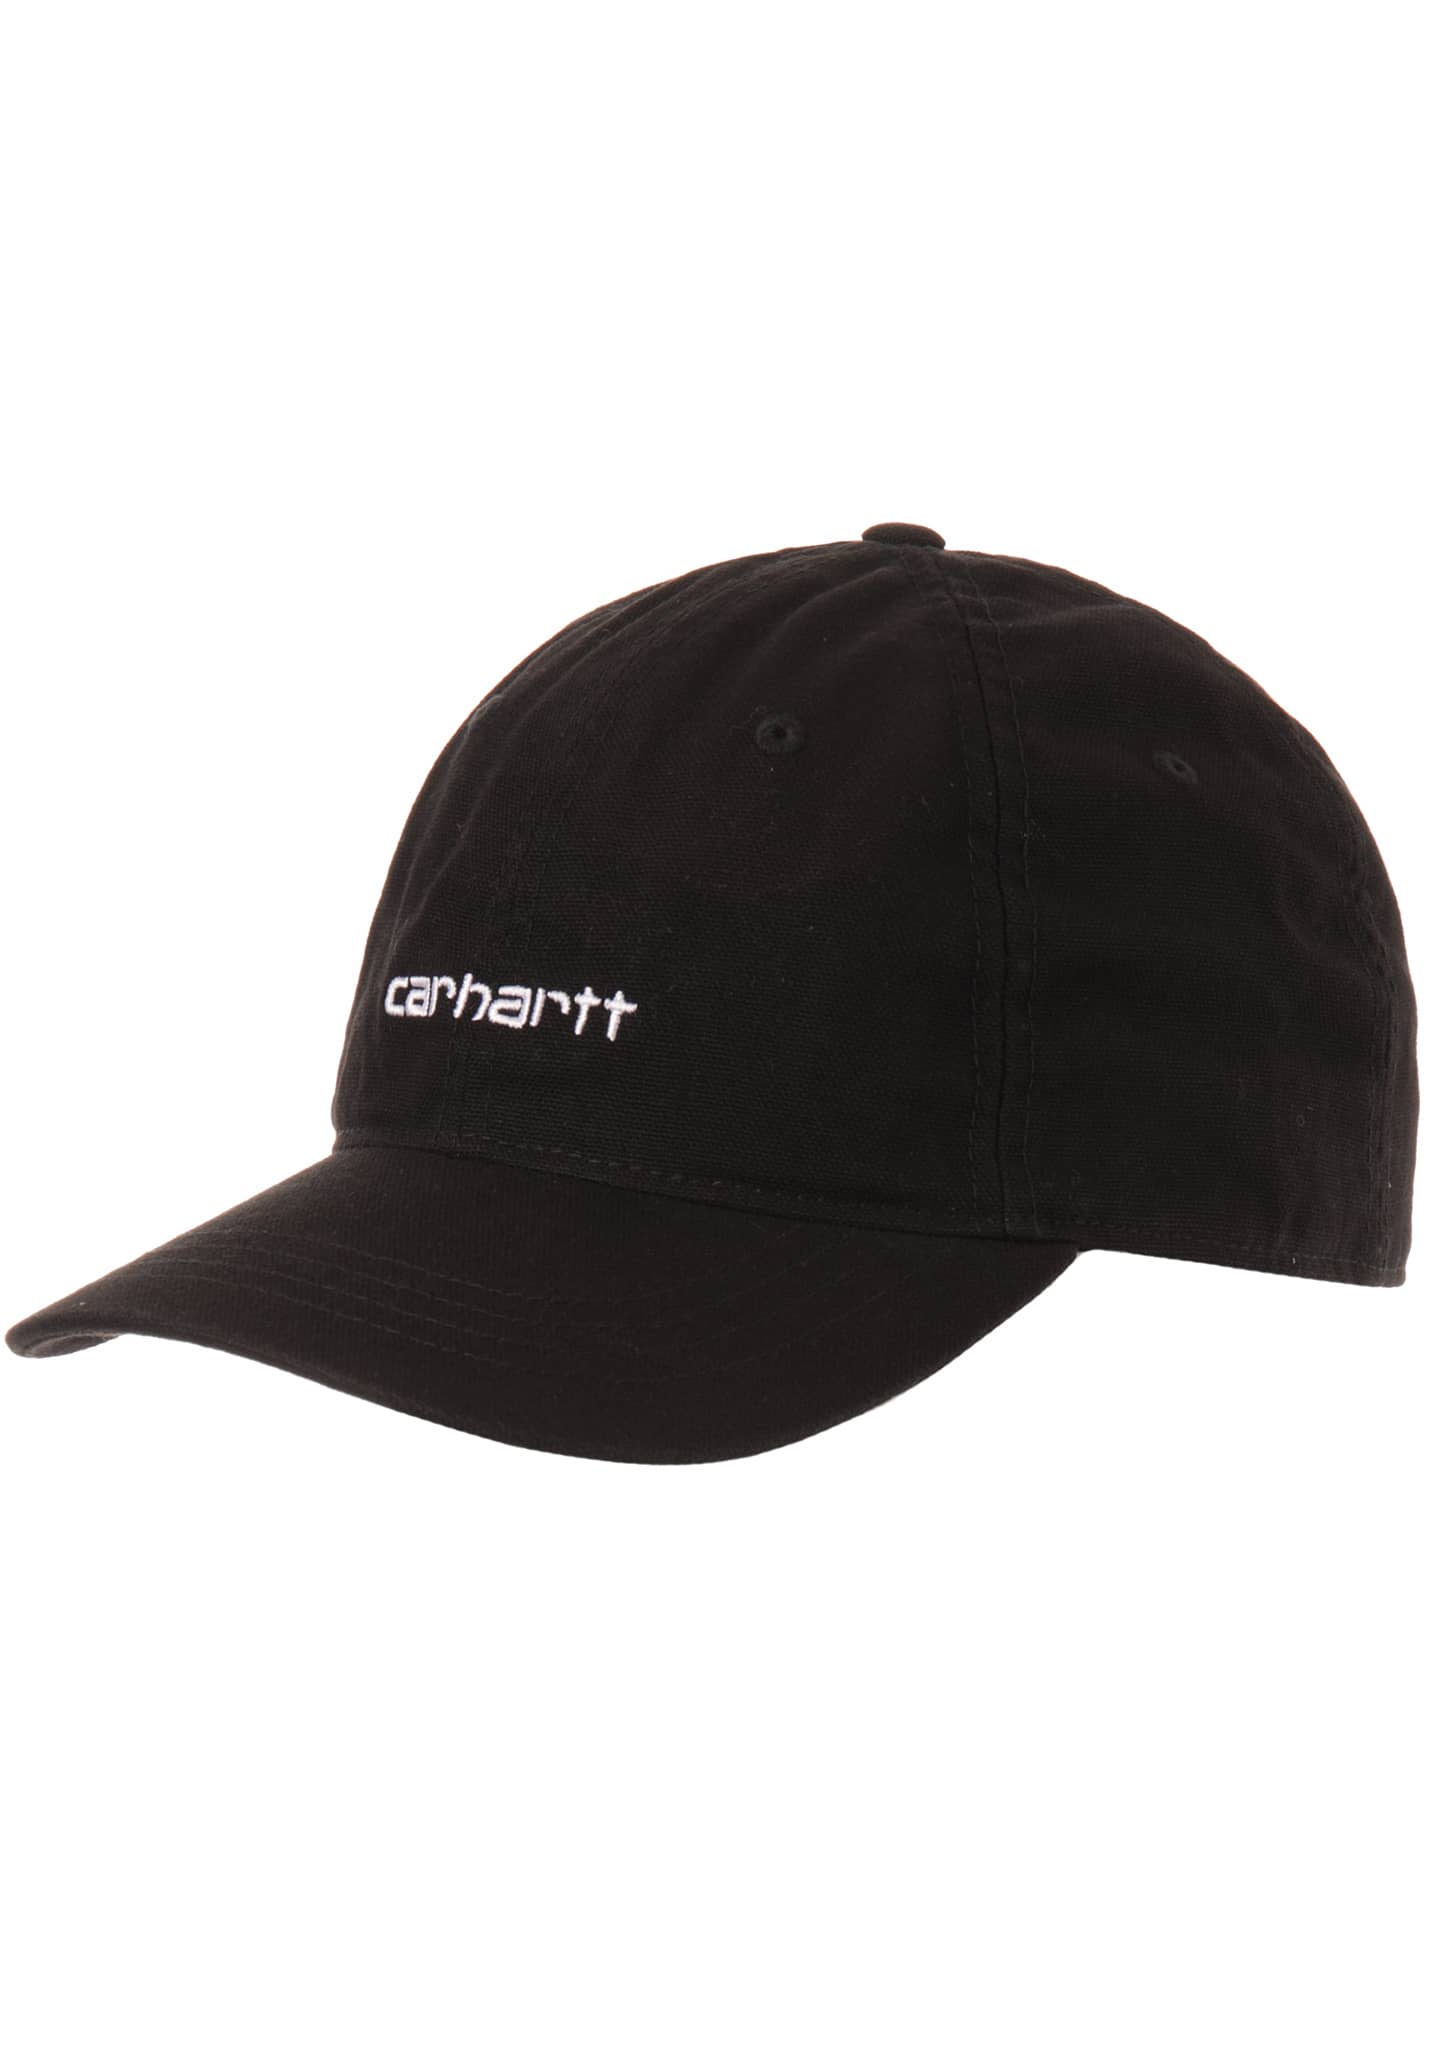 Carhartt WIP Canvas Coach Snapback Cap schwarz / weiß One Size